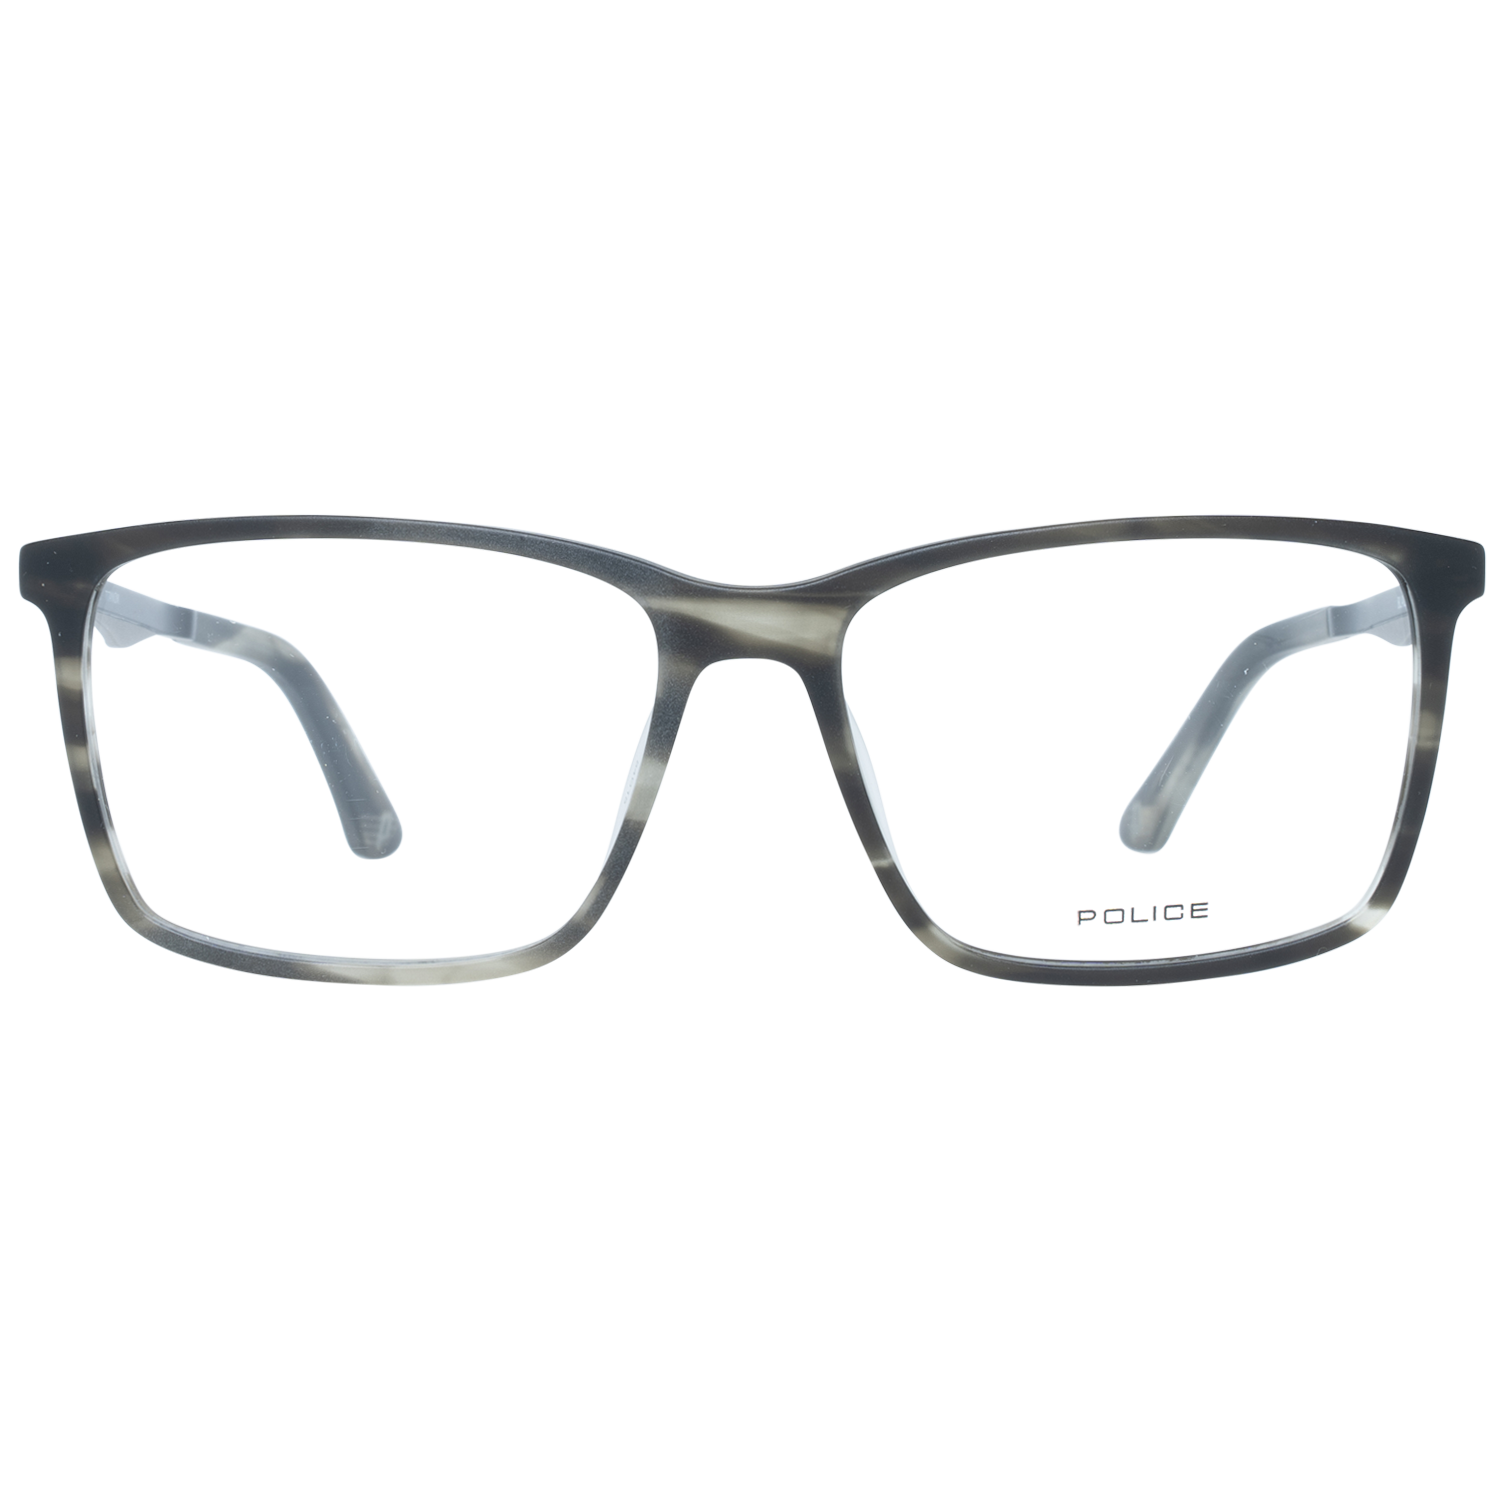 Police Frames Police Glasses Frames VPL683 4ATM 54 Eyeglasses Eyewear UK USA Australia 